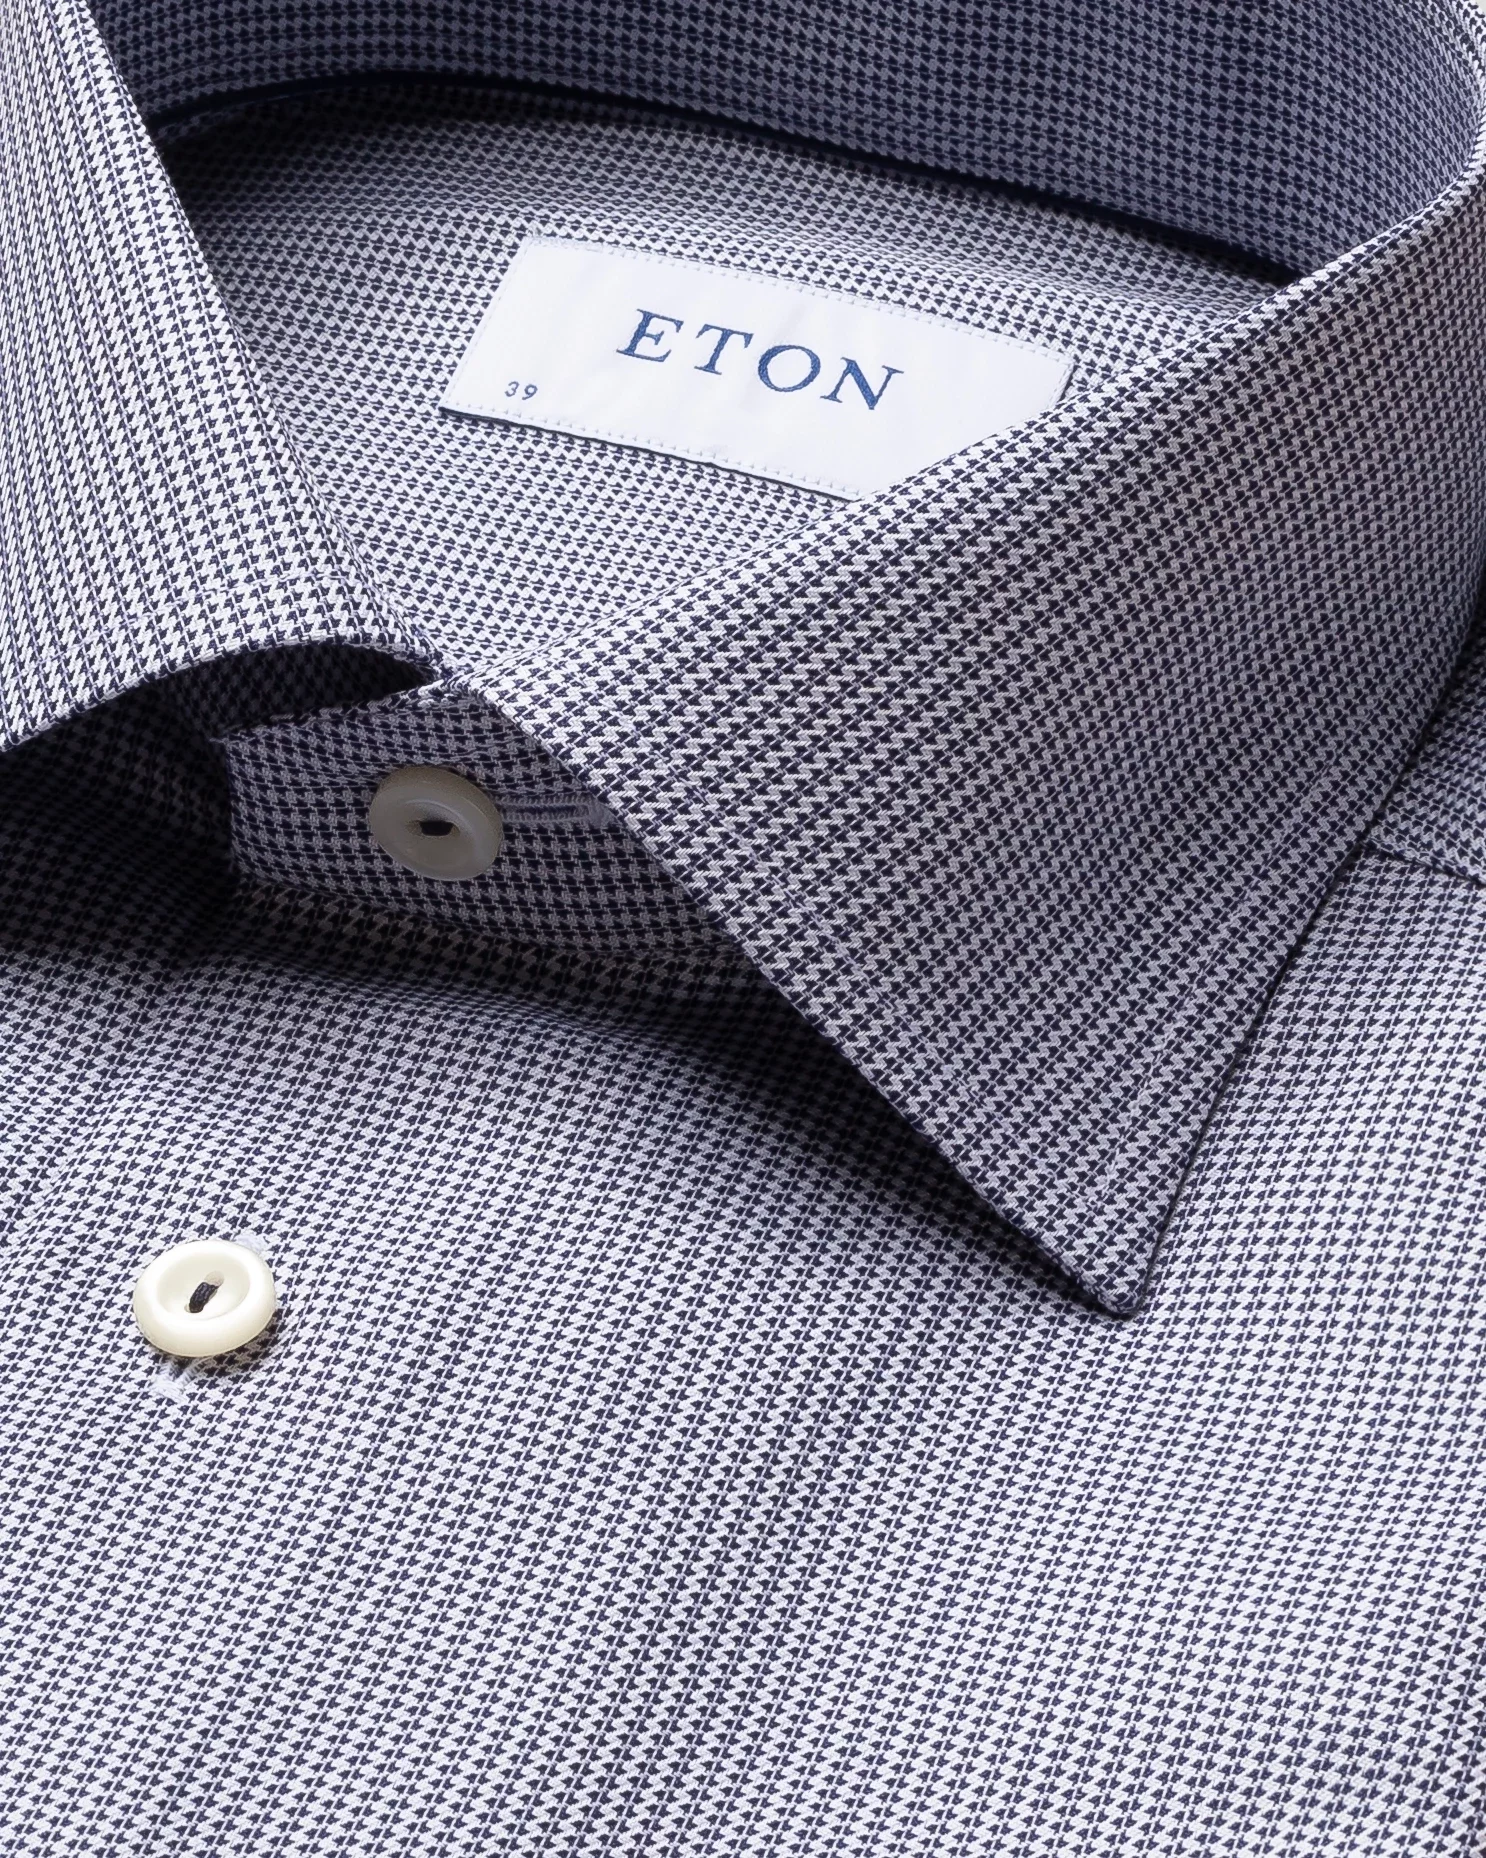 Eton - blue houndstooth stretch shirt cut away